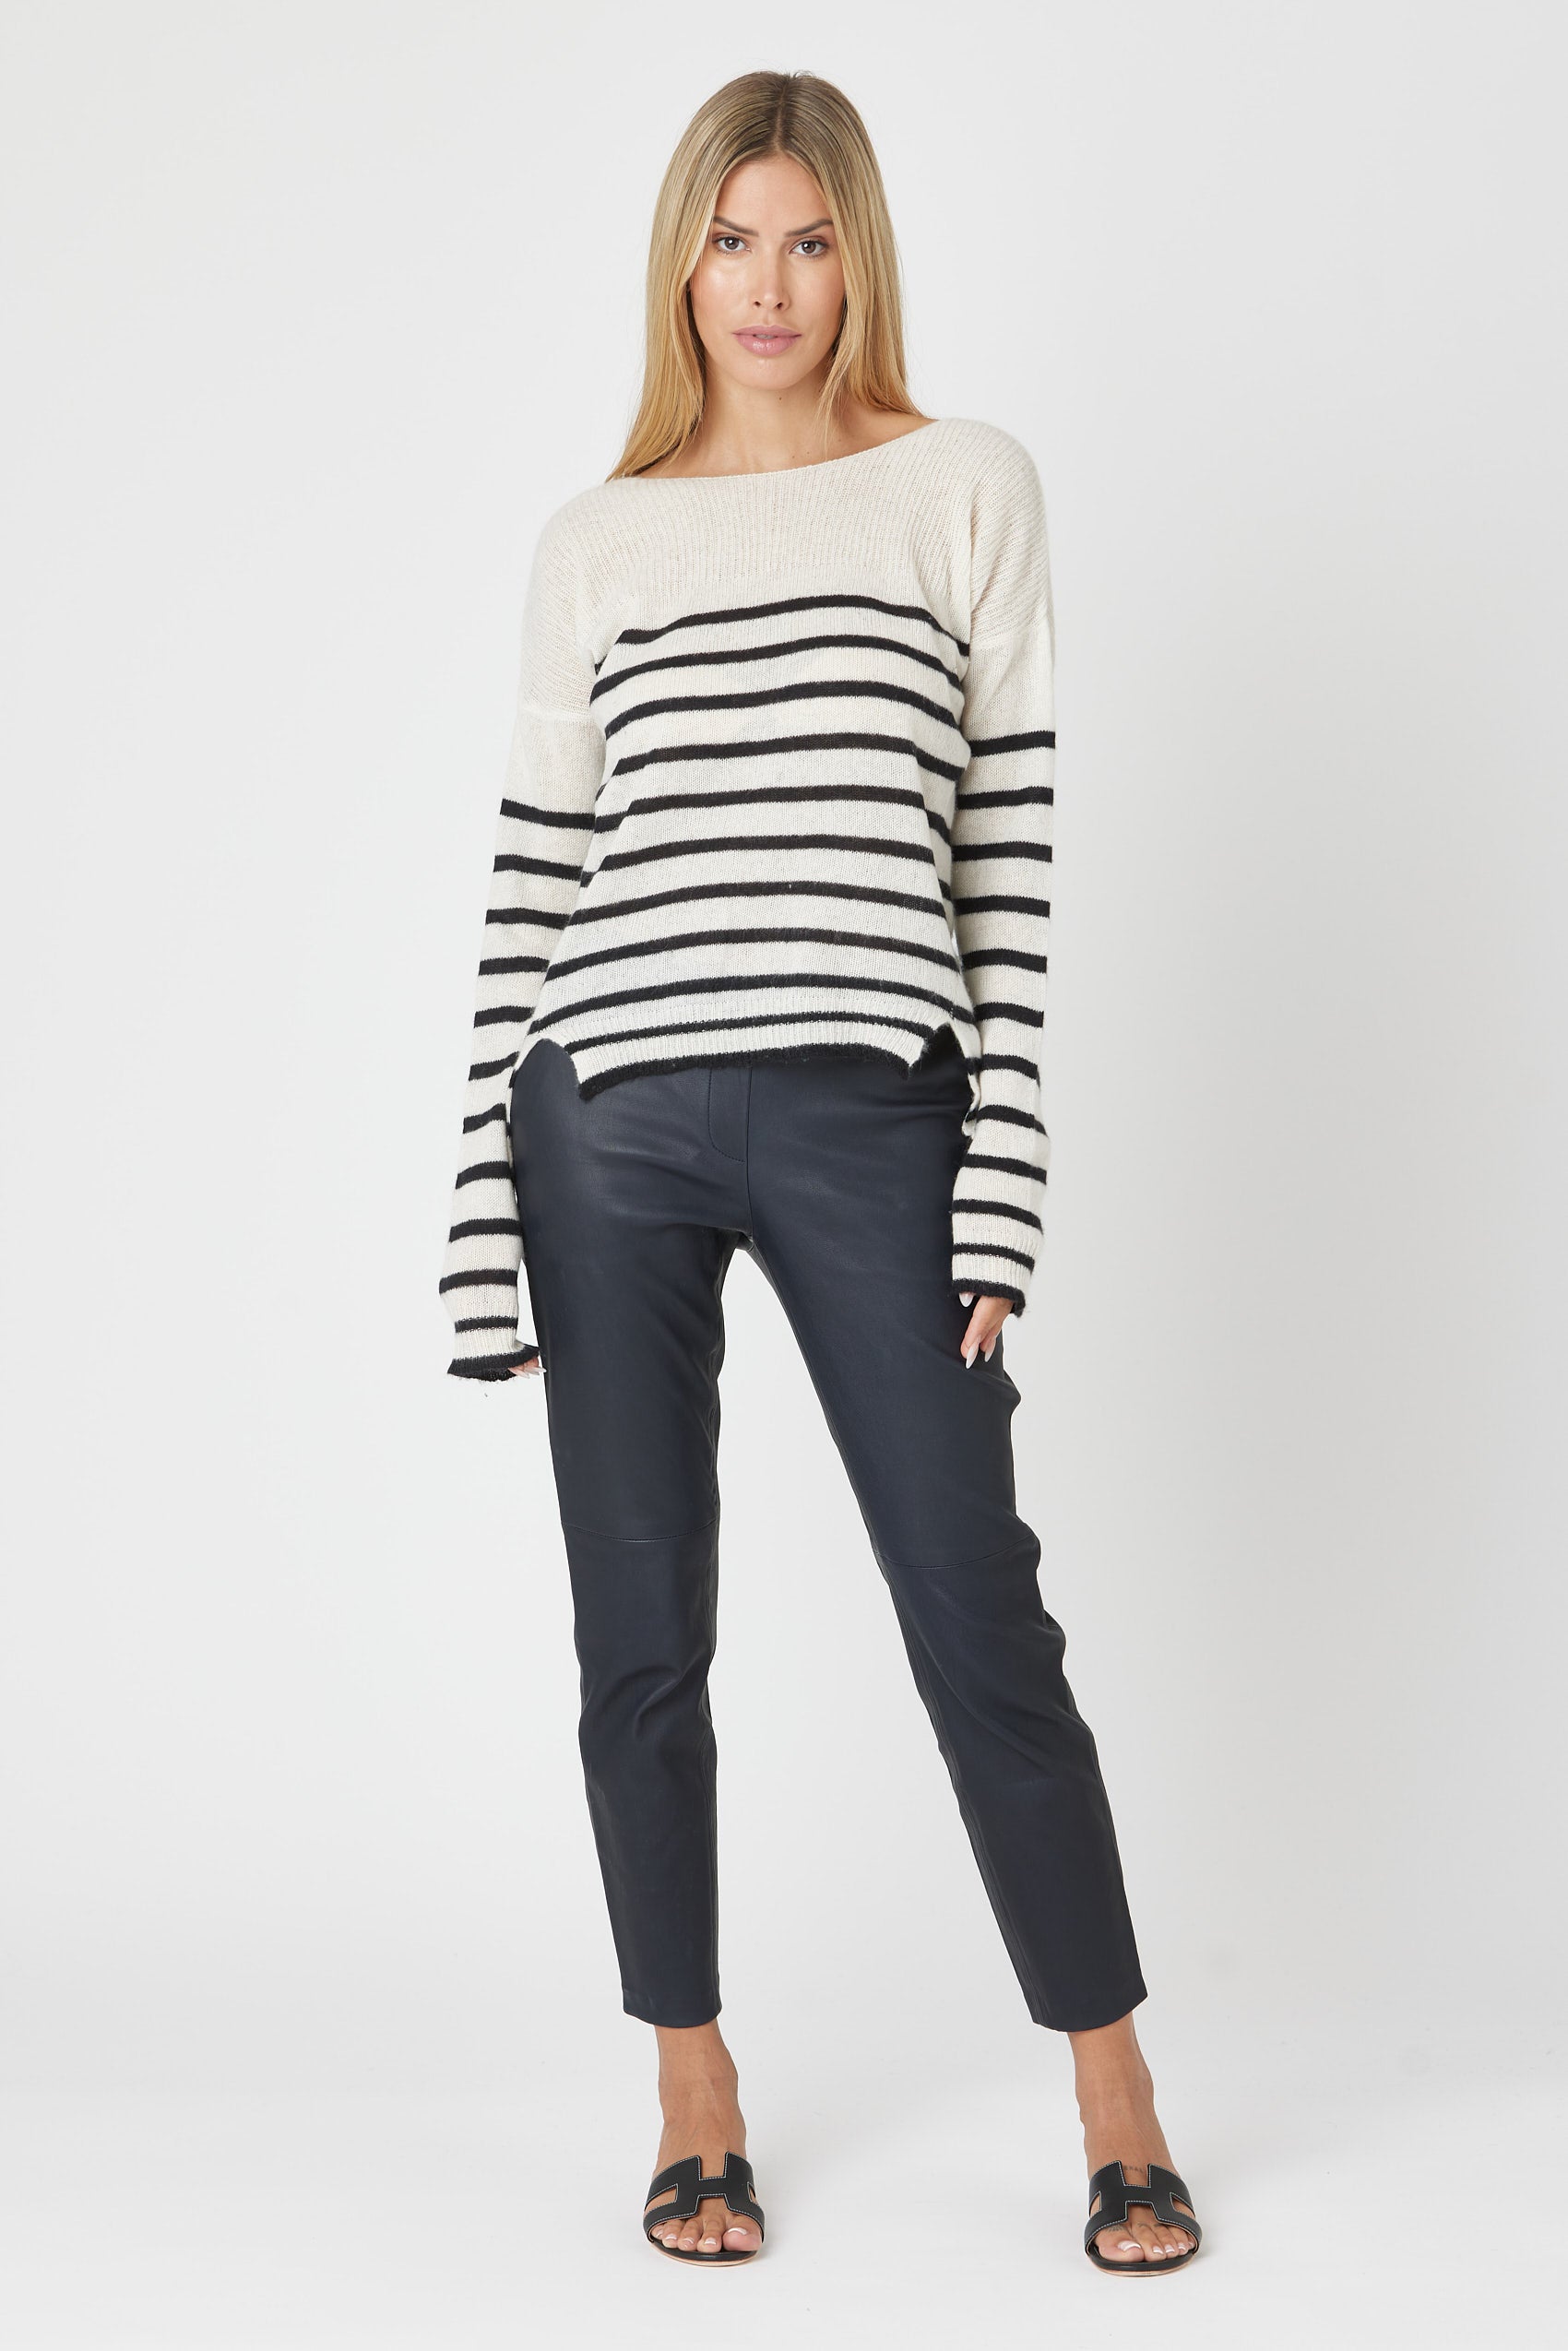 Striped All Seasons Sweater - Nuan Cashmere - classic - elegant - cashmere